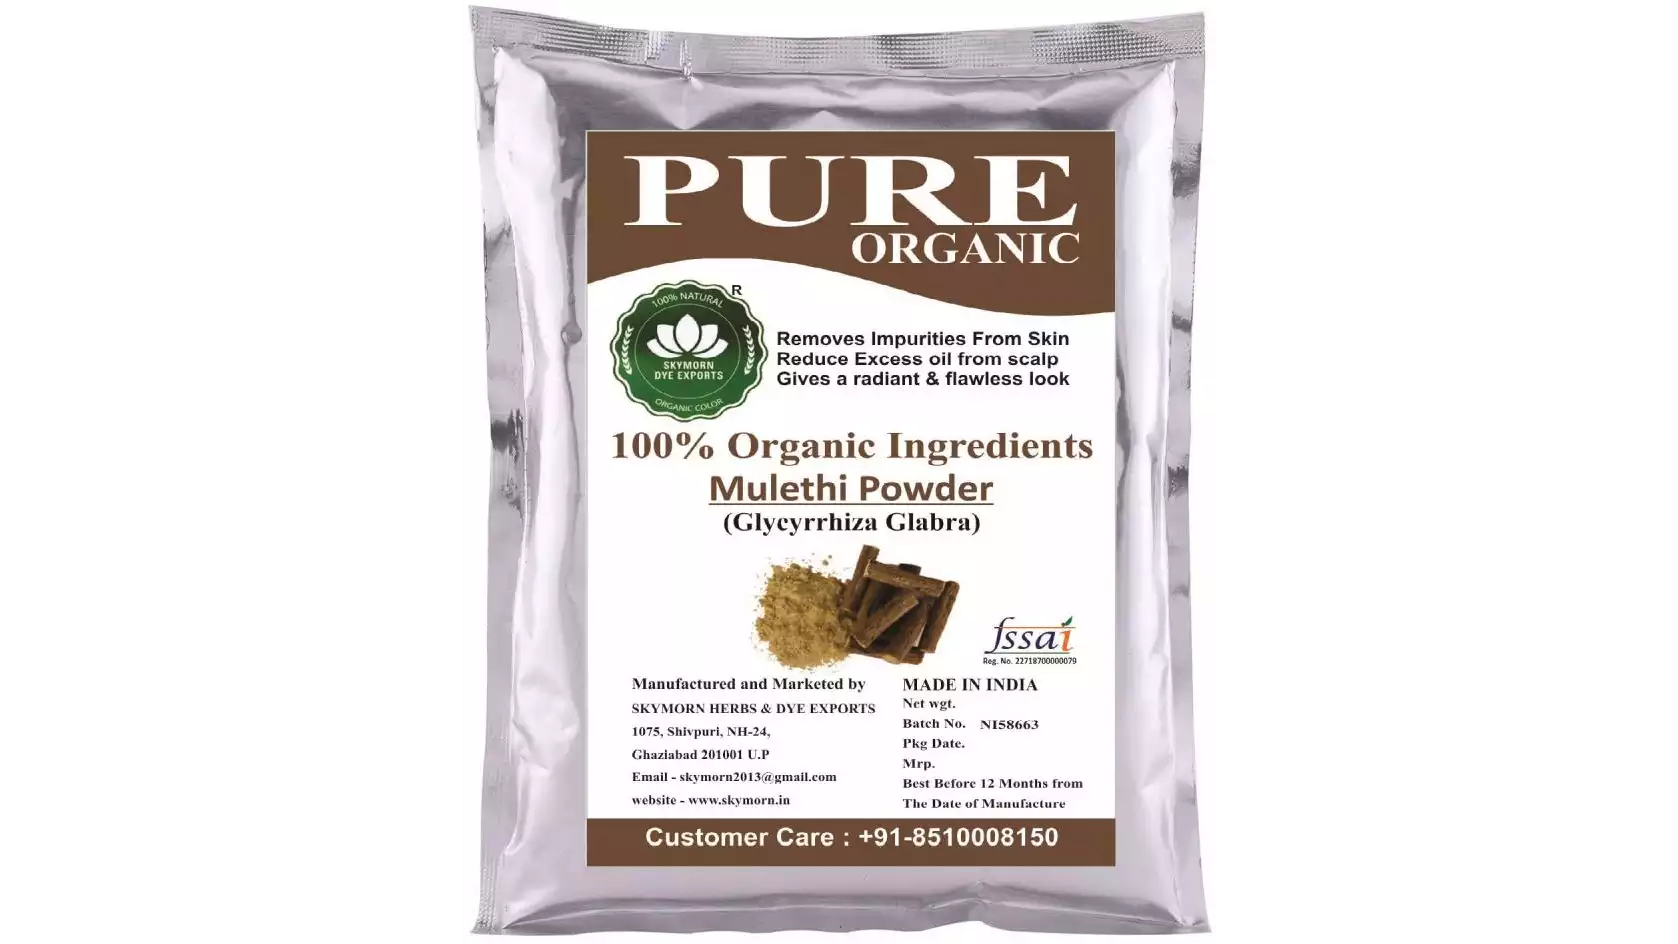 SkyMorn Pure Organic Mulathi (Licorice) Powder (500g)